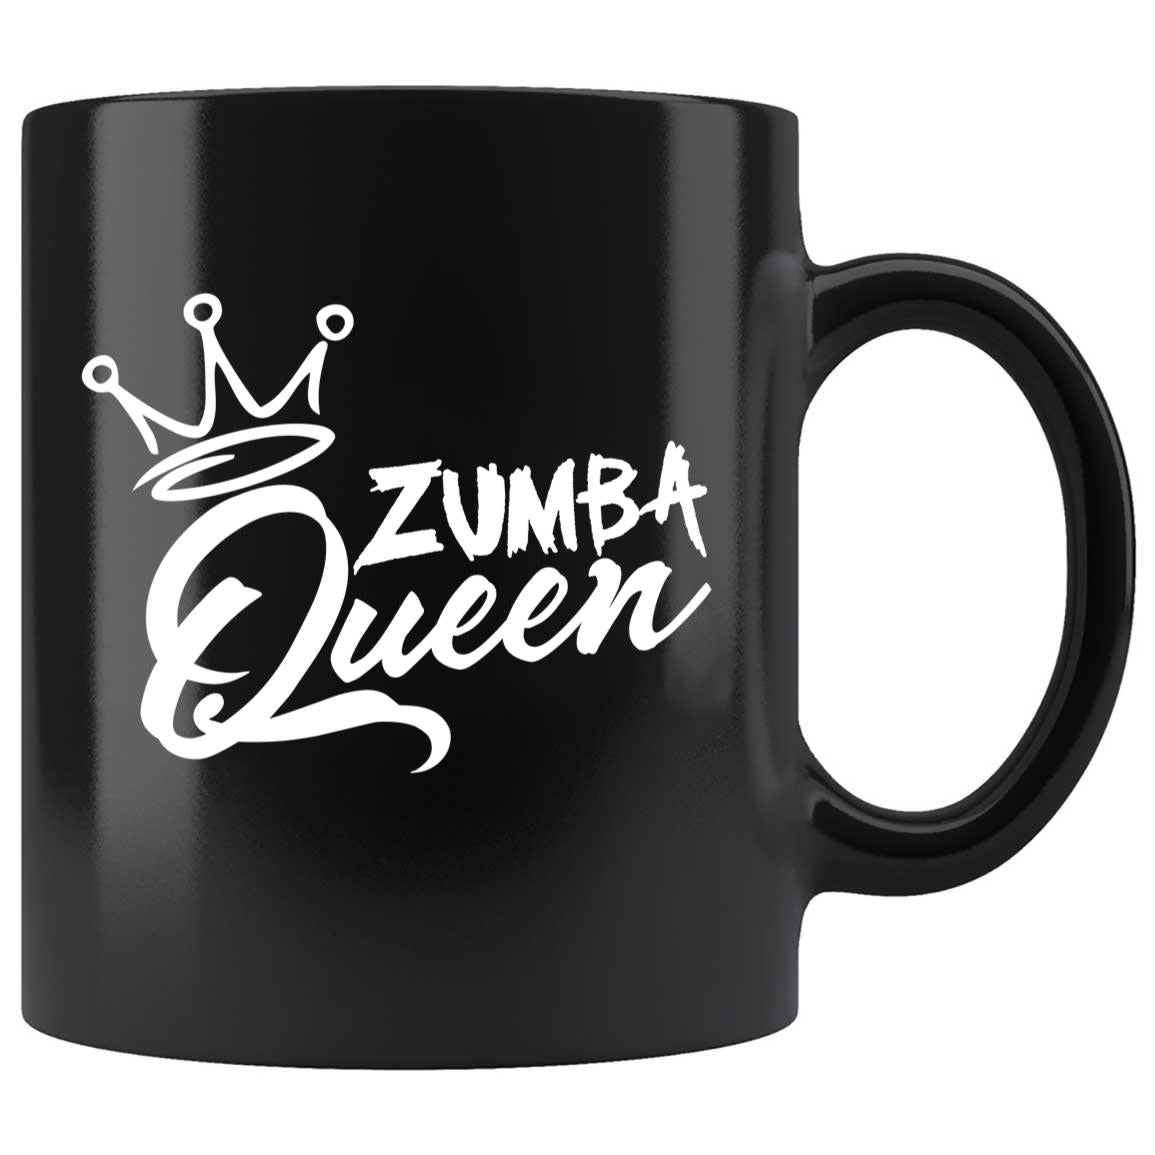 Skitongifts Coffee Mug Funny Ceramic Novelty Zumba Queen slHAbWc